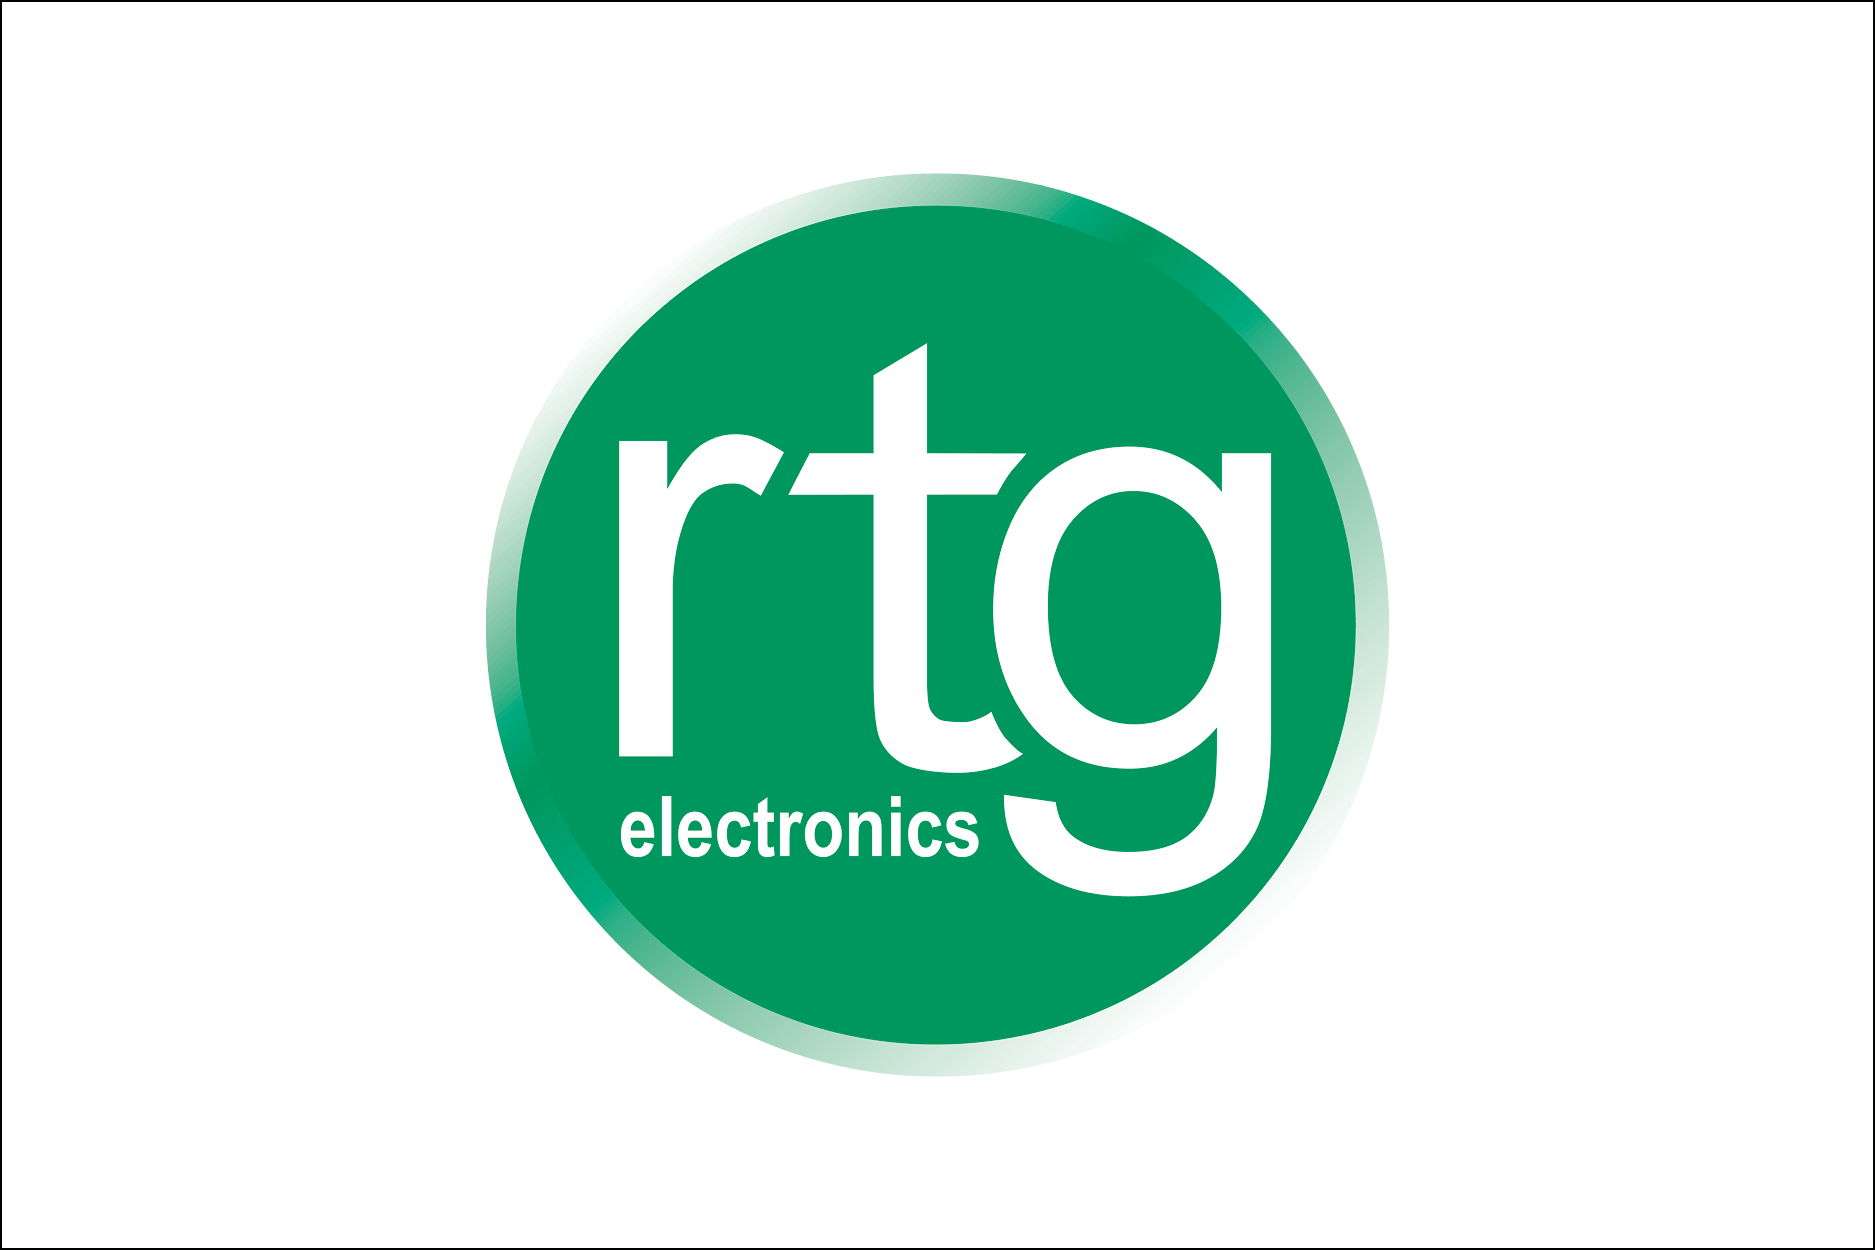 rtg electronics